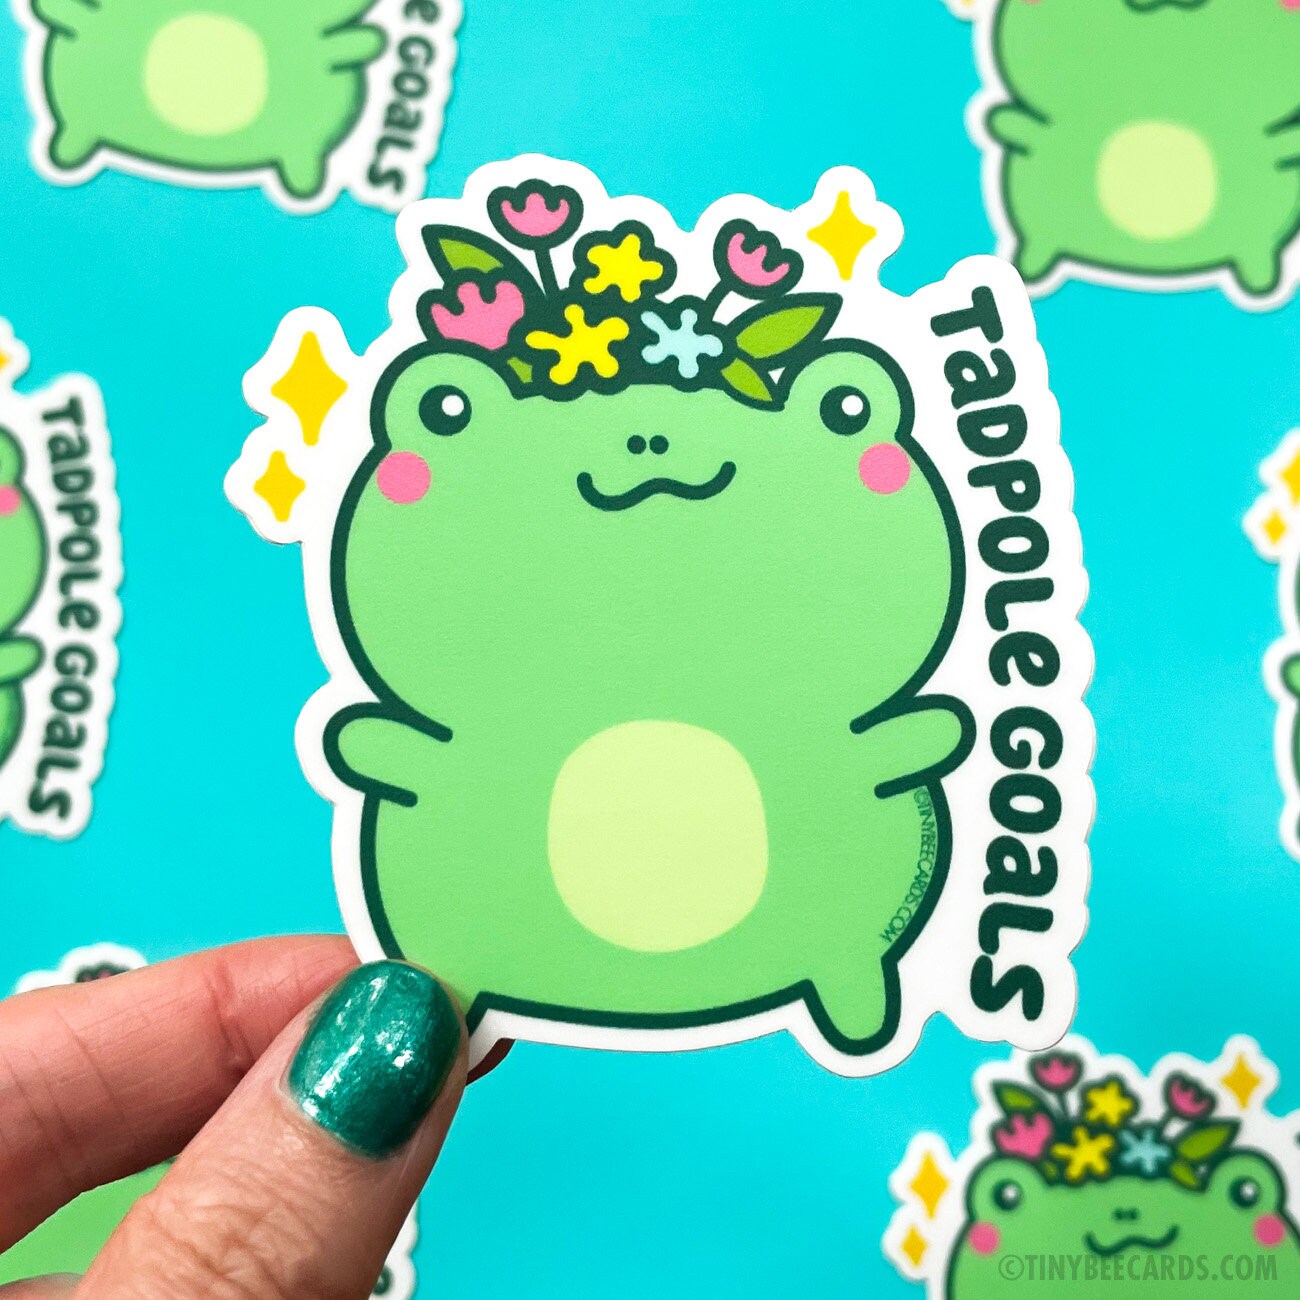 Frog Sticker "Tadpole Goals" - cute frog vinyl sticker, cottagecore decal, funny frog goblincore illustration, laptop sticker, cute gift